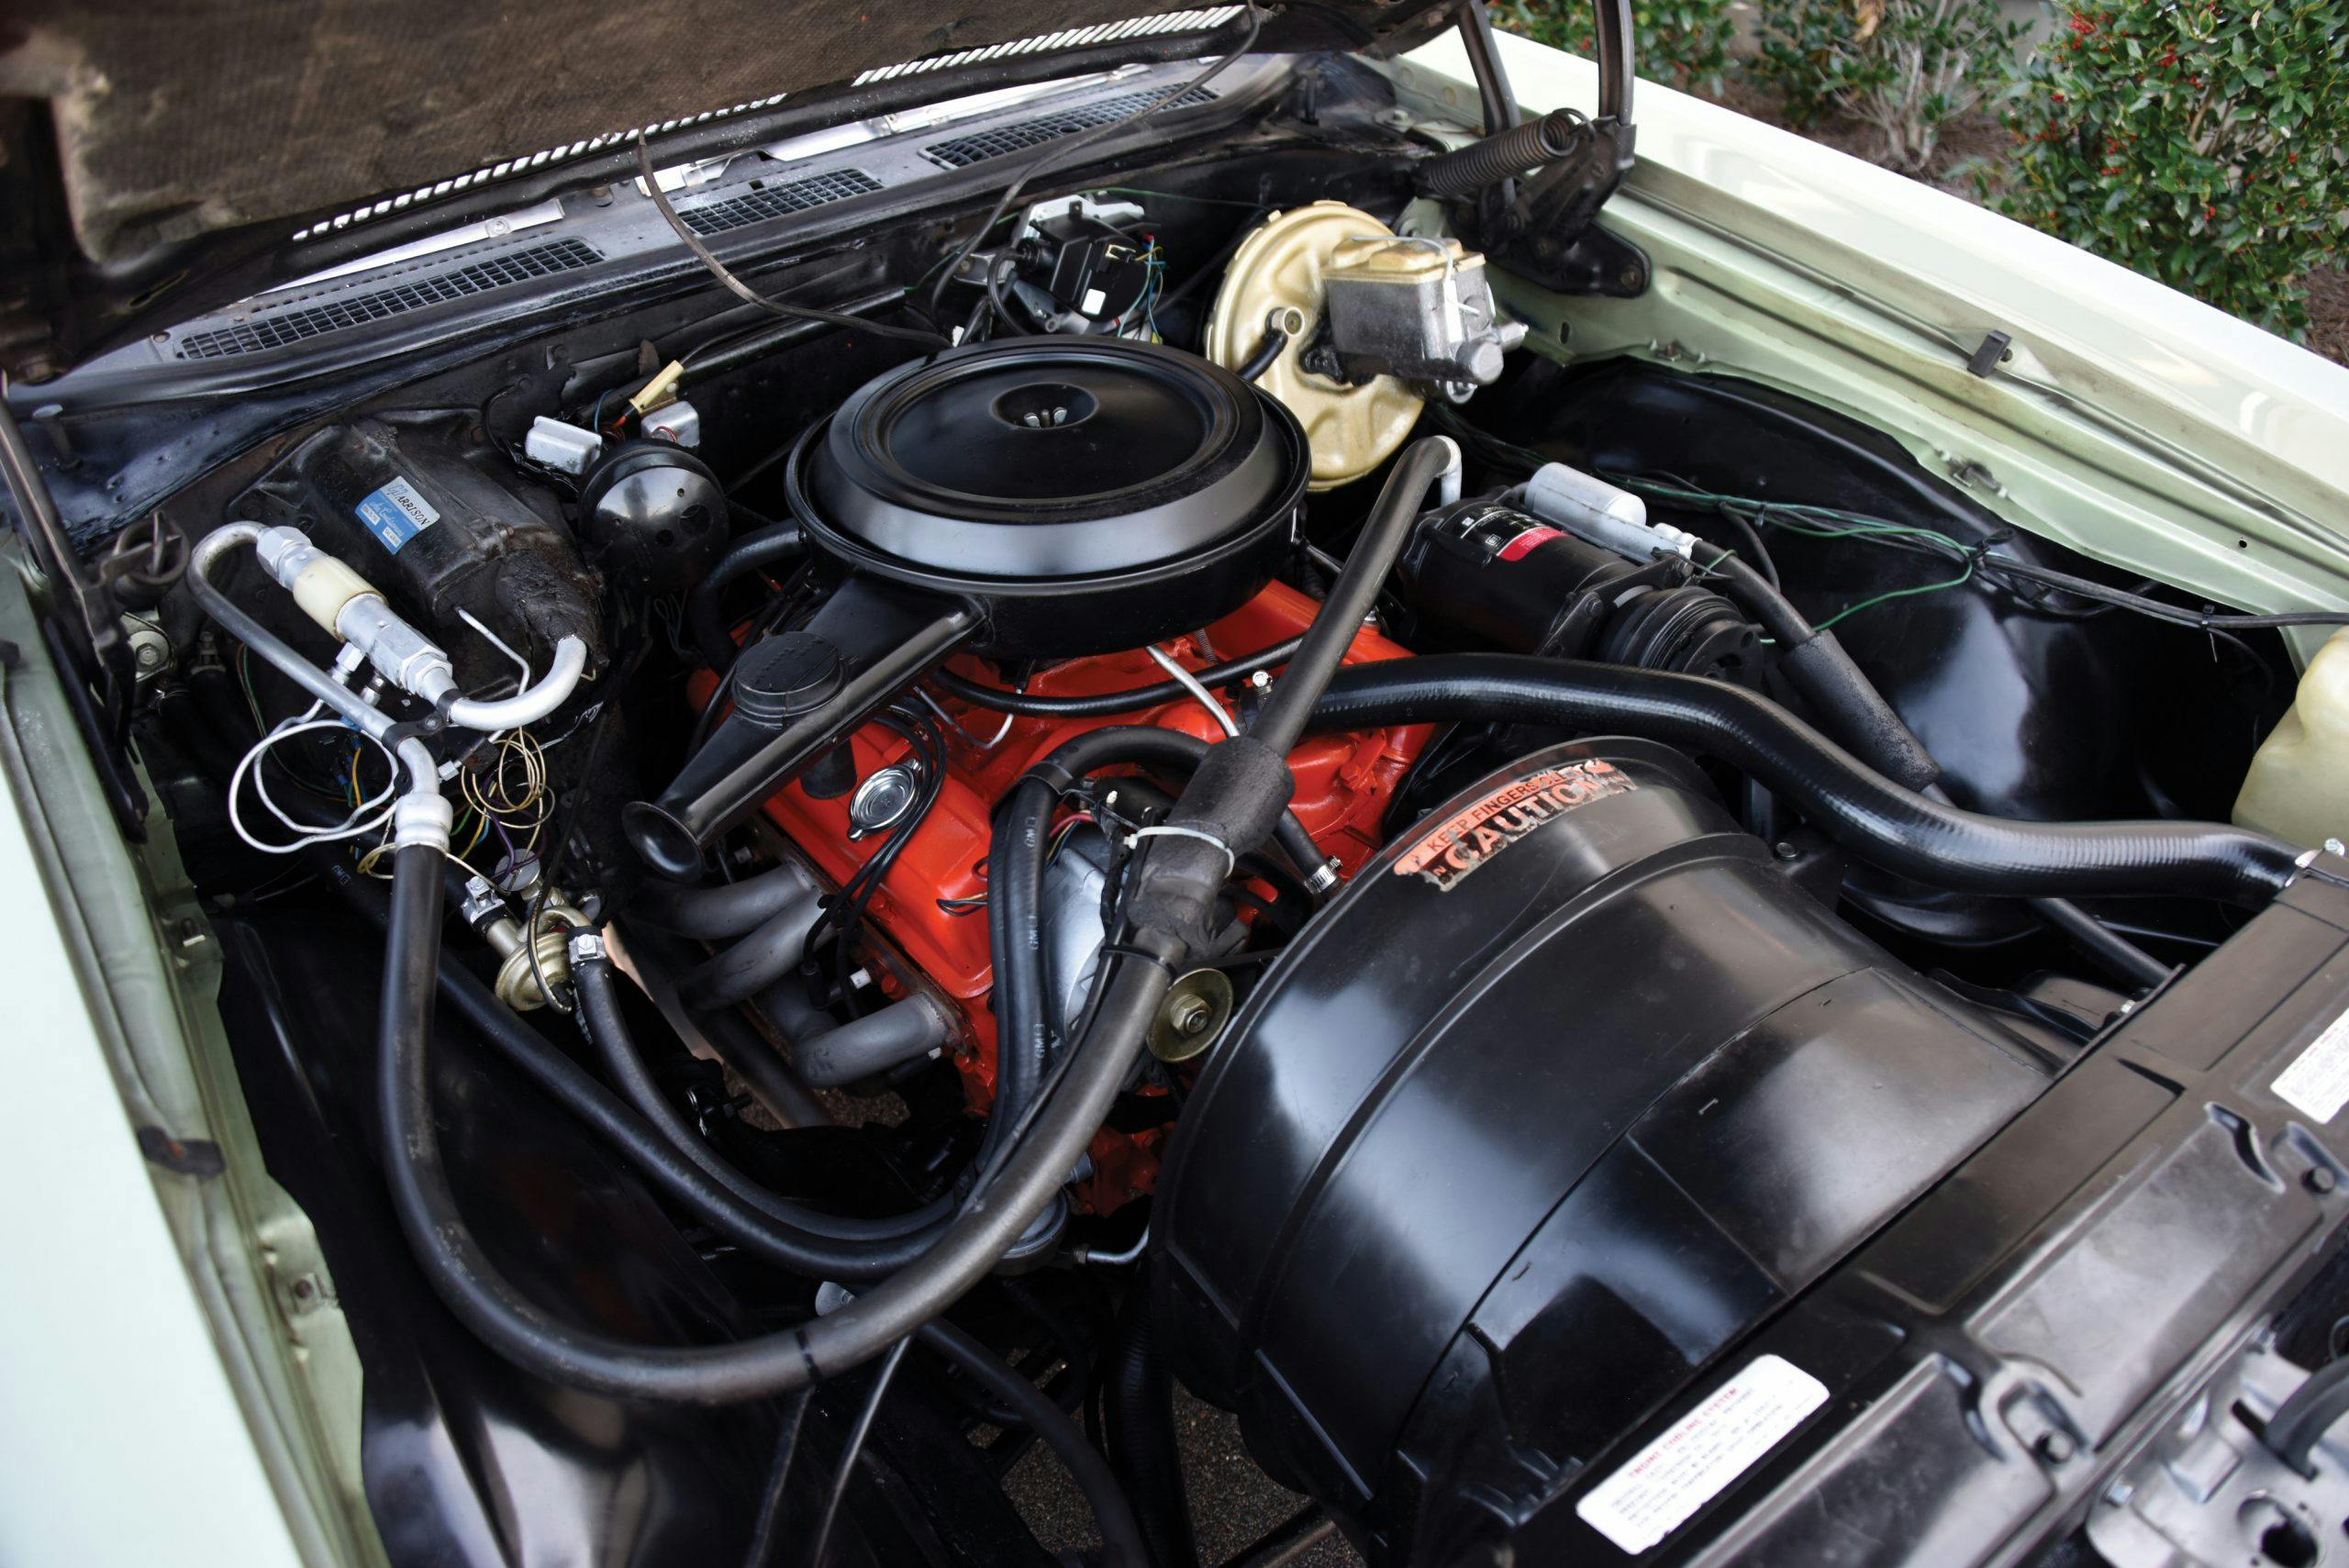 1970 Chevrolet Monte Carlo engine bay